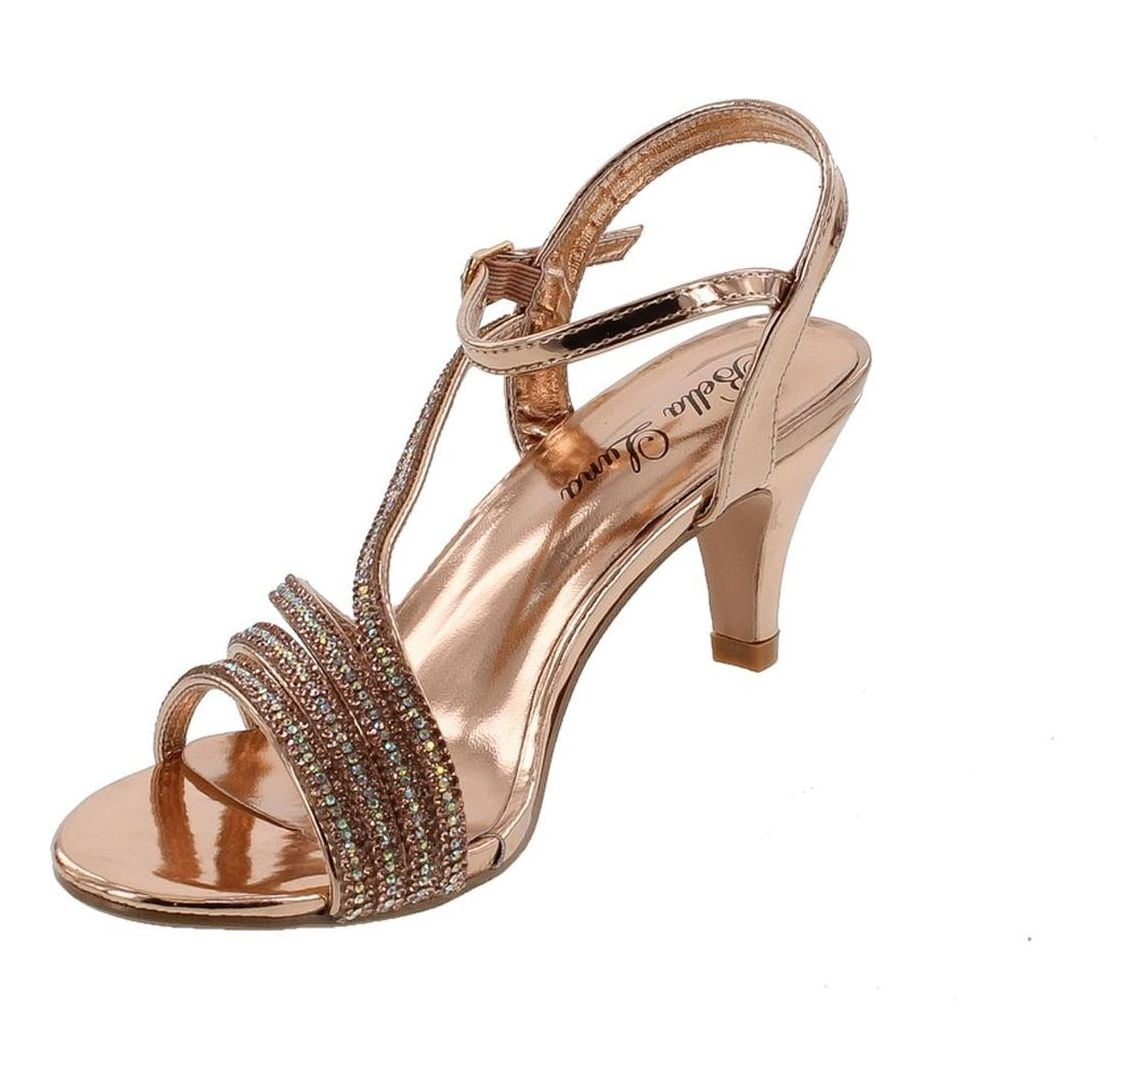 Rock Glitter Block Heel Sandals - 11 / ROSE GOLD | Bride shoes, Wedding  sandals, Block heels sandal